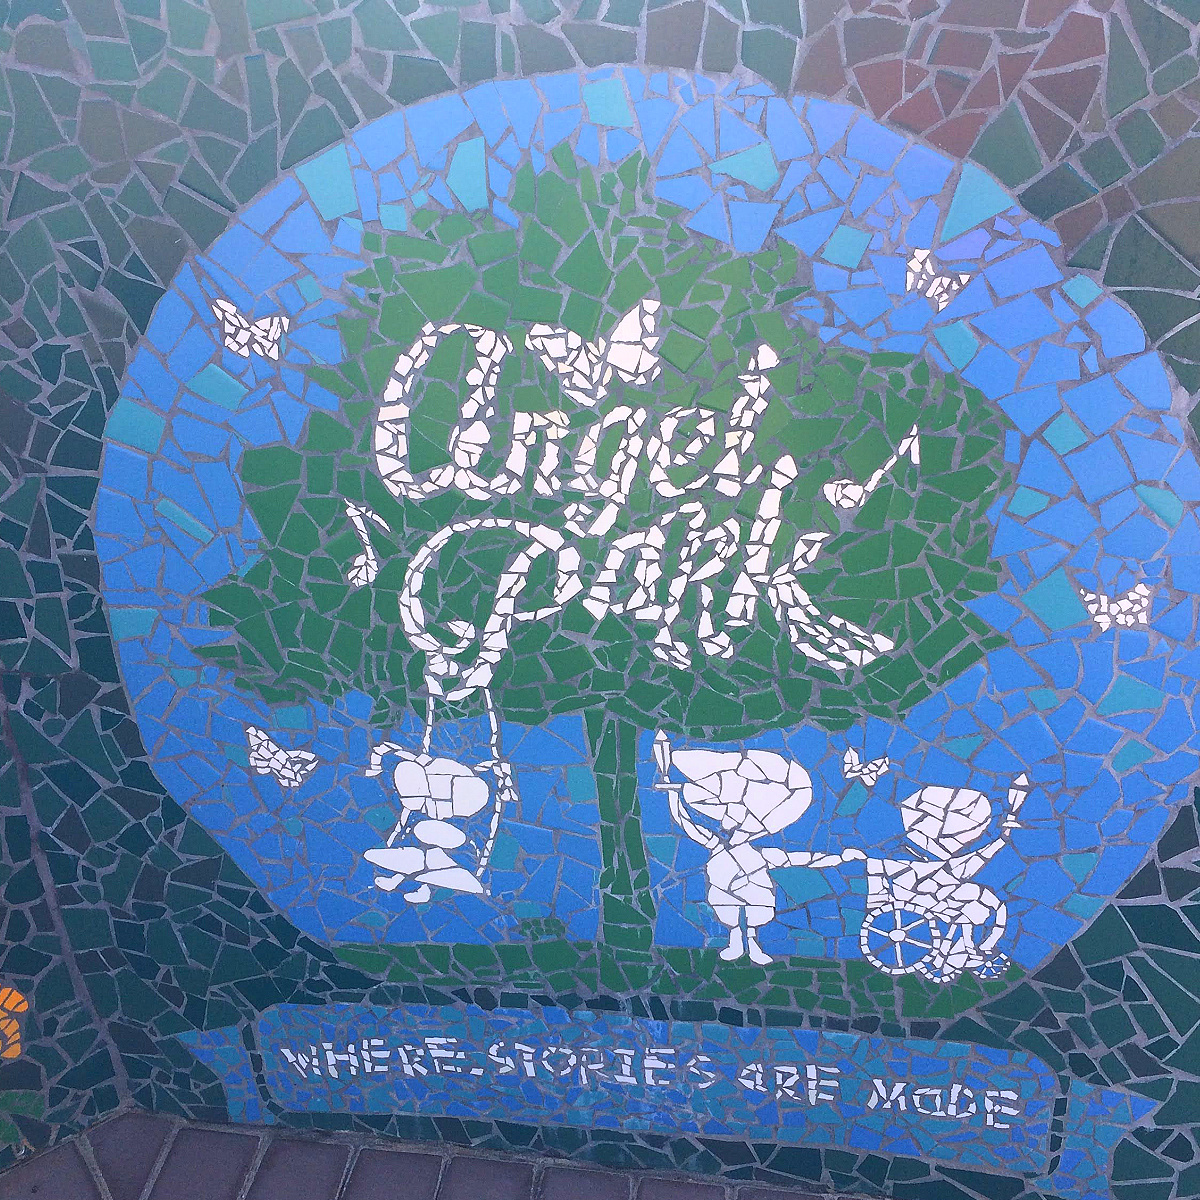 angel park playground